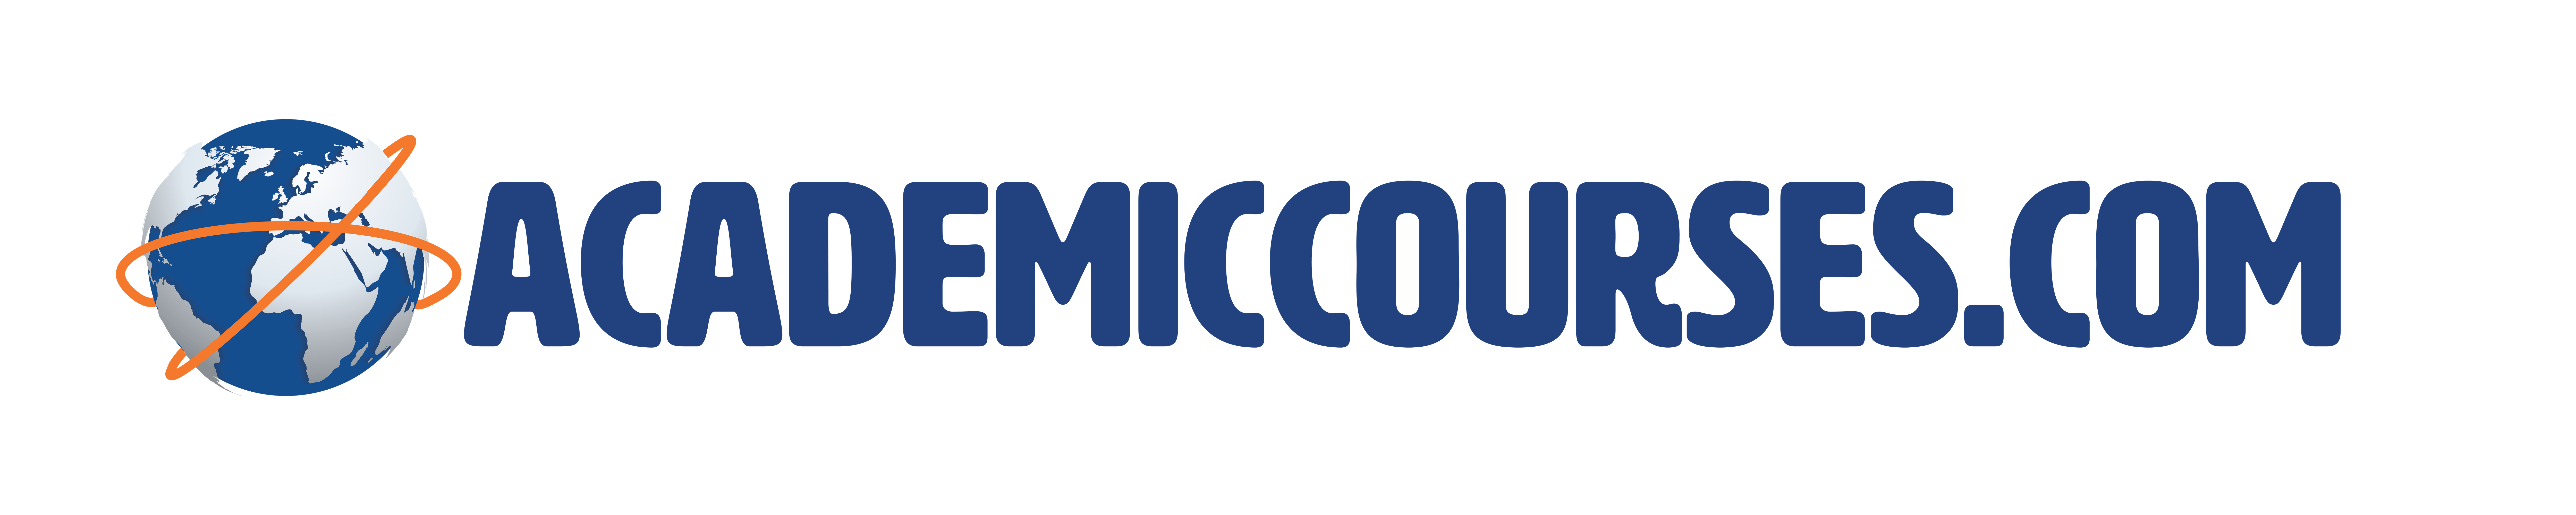 academiccourses logo